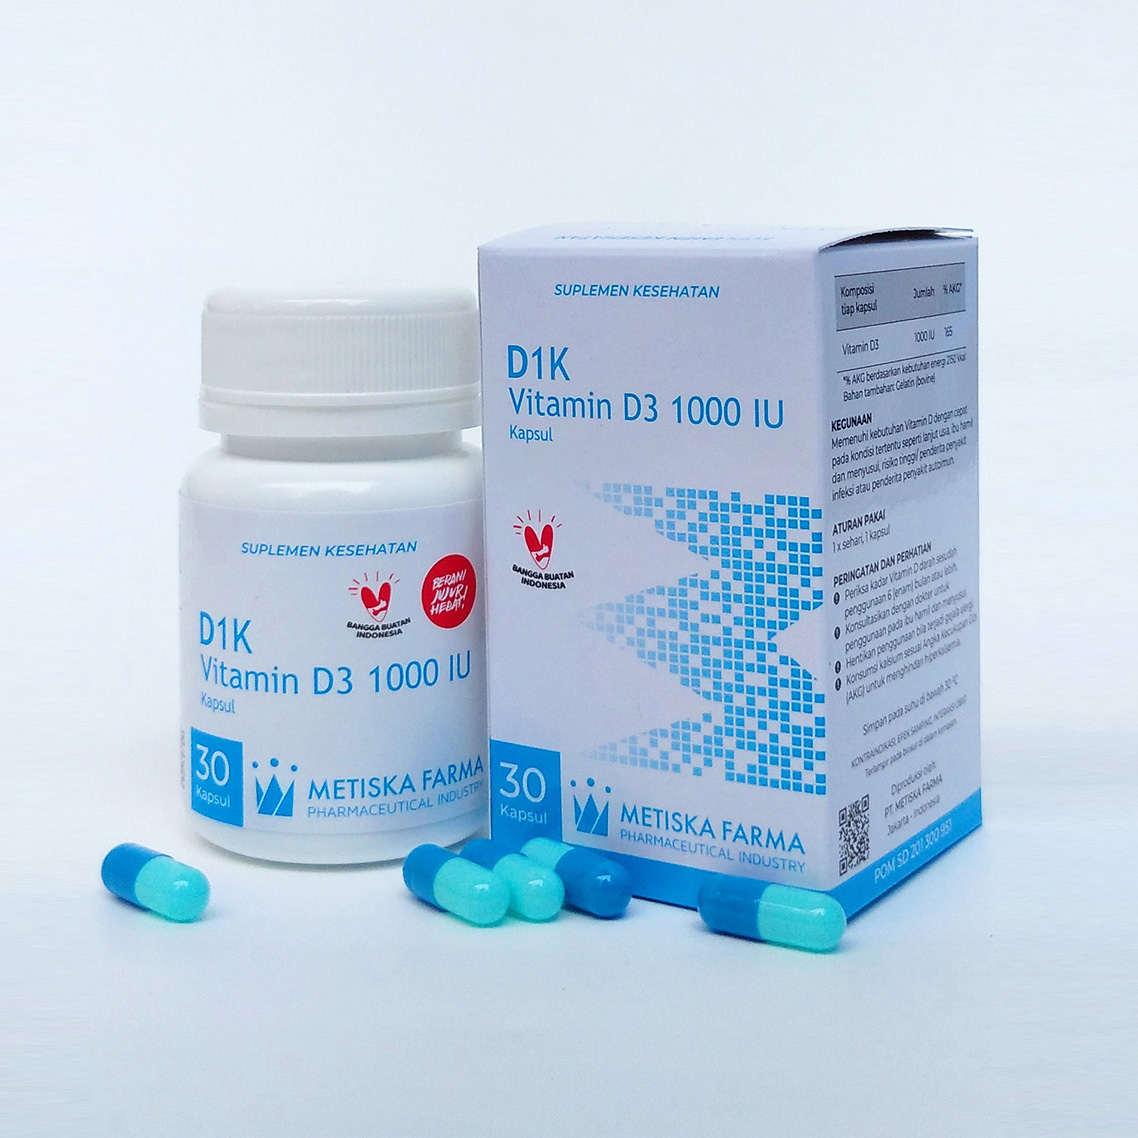 D1k kapsul Vitamin D3 1000 IU